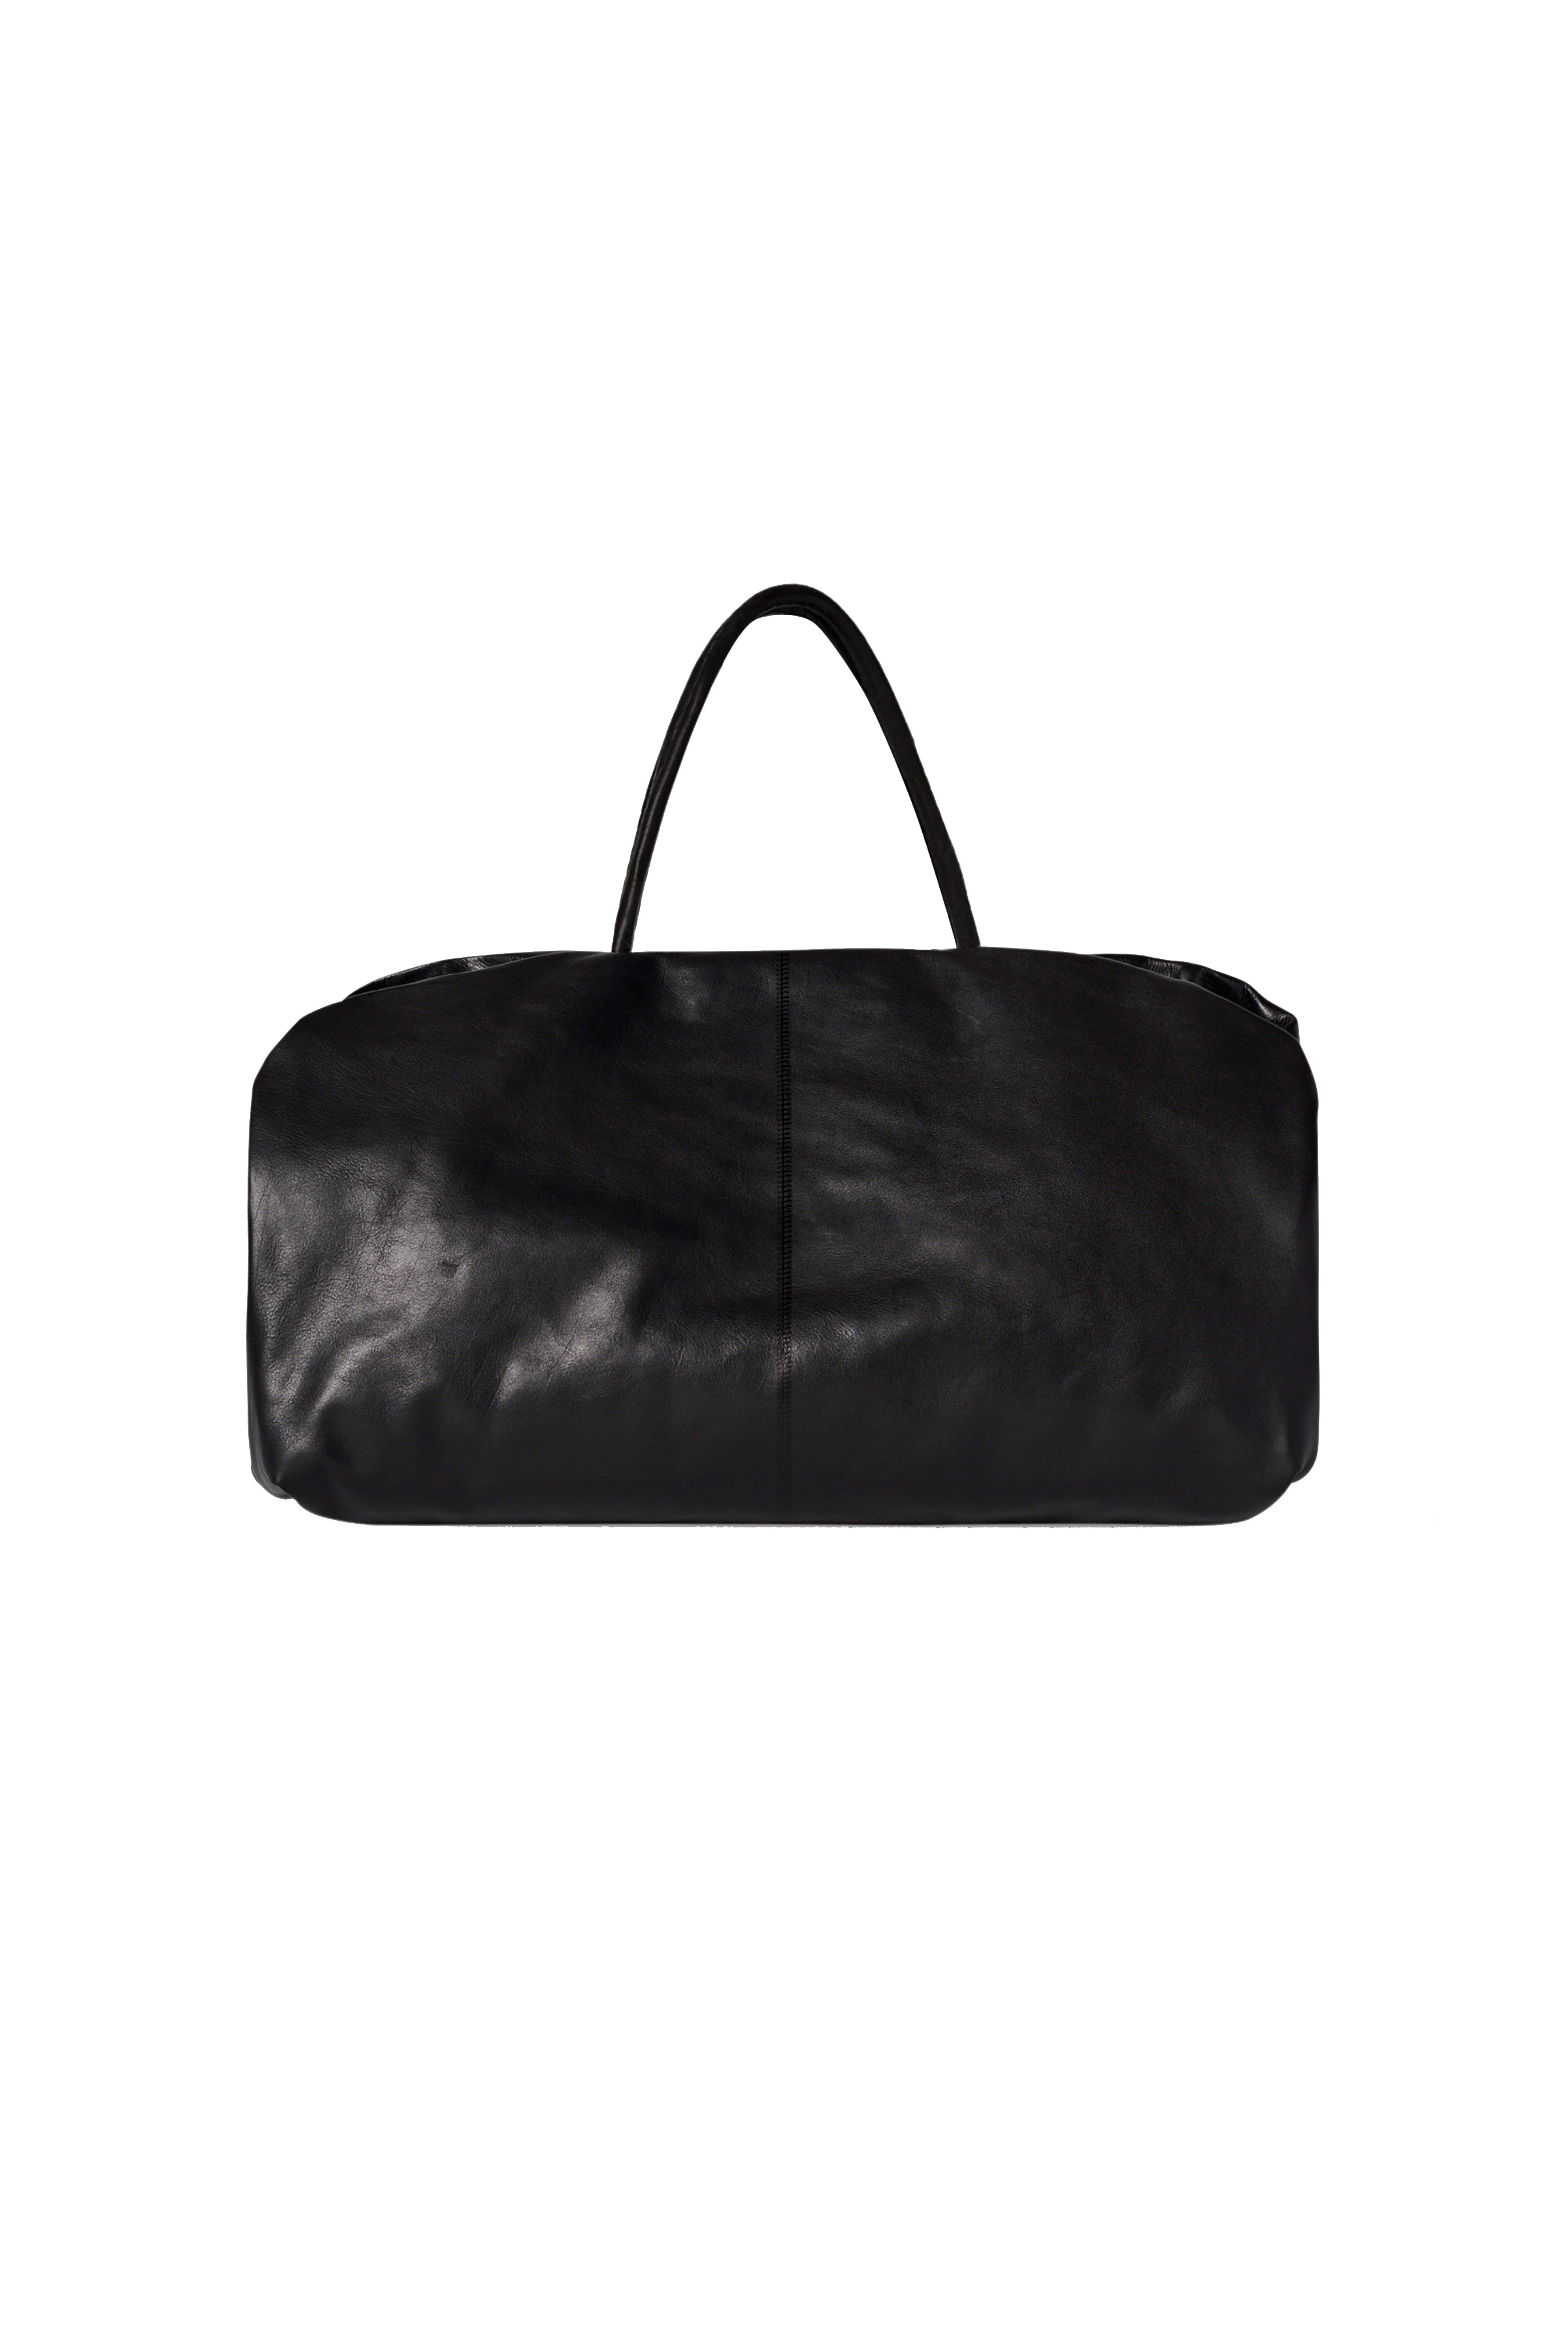 THE ROW Elio Bourse Bag in Black